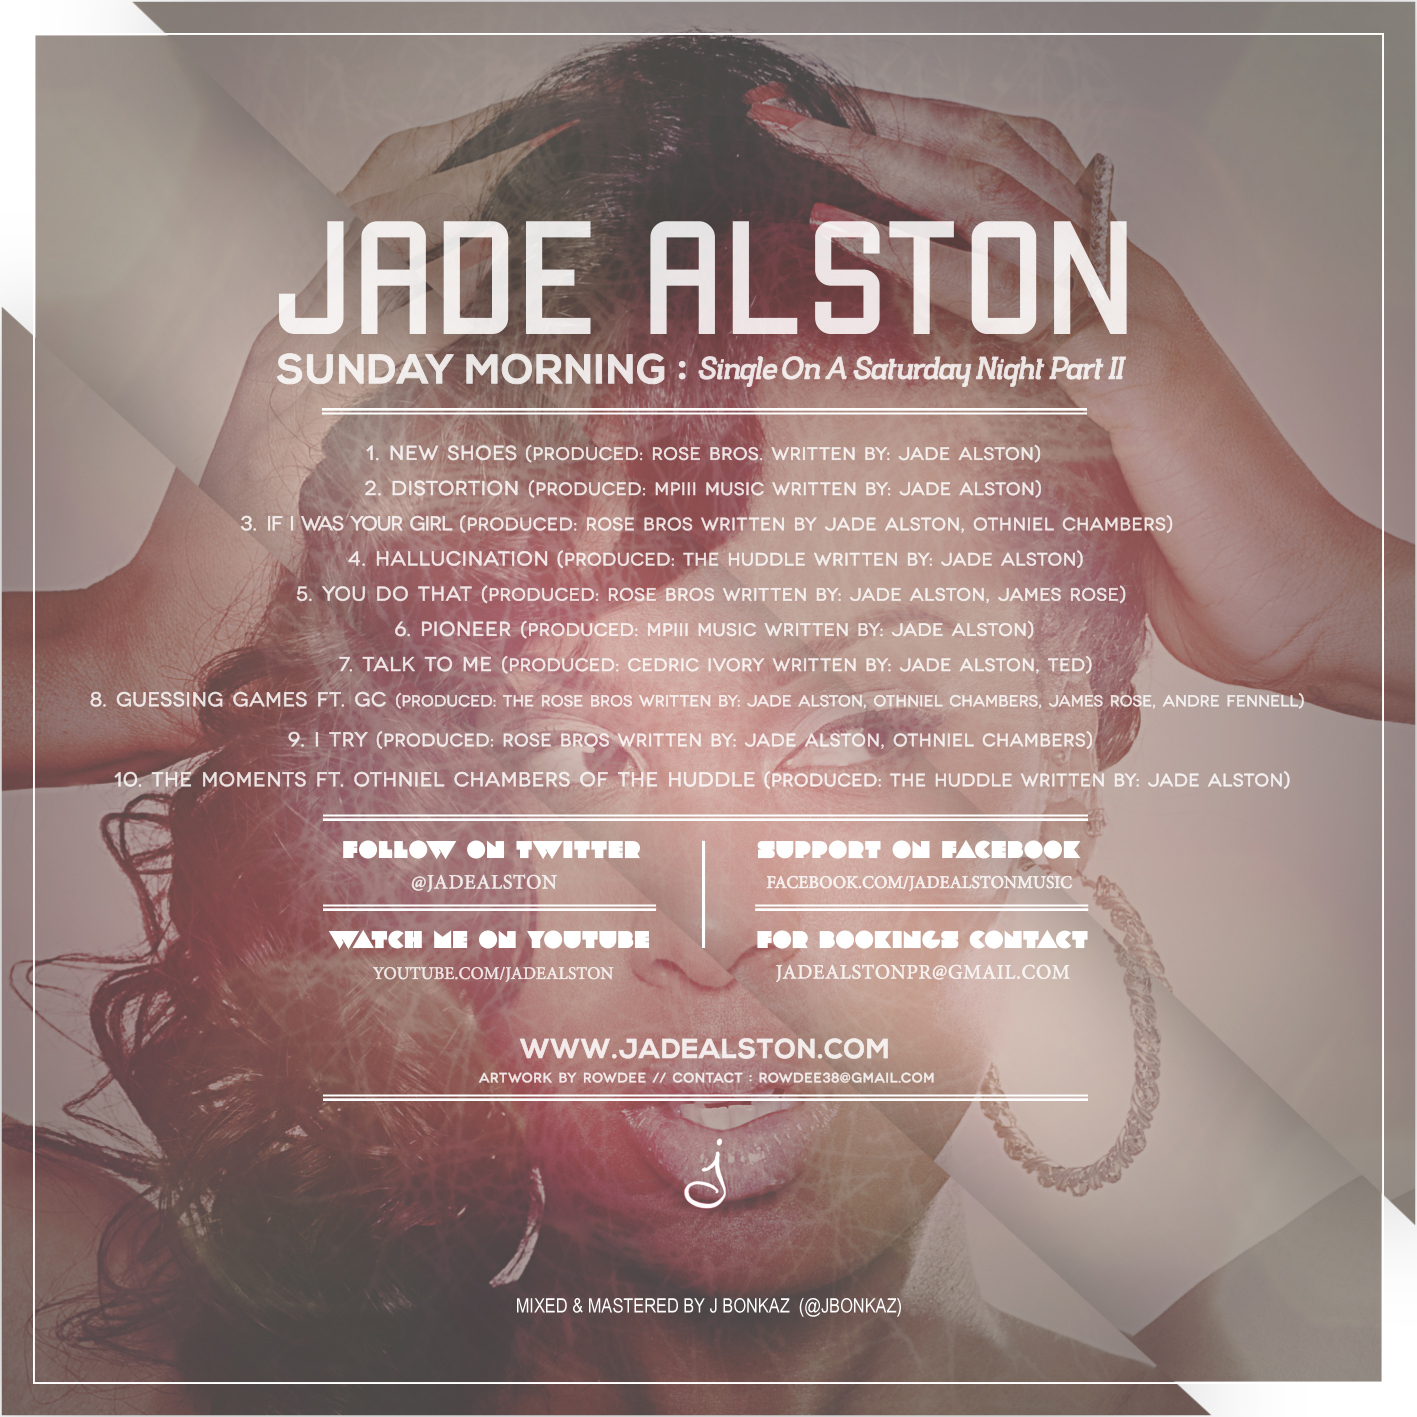 jade-alston-sunday-morning-single-on-a-saturday-night-pt-2-ep-tracklist-HHS1987-2013 Jade Alston (@JadeAlston) - Sunday Morning: Single on A Saturday Night Pt. 2 (EP)  